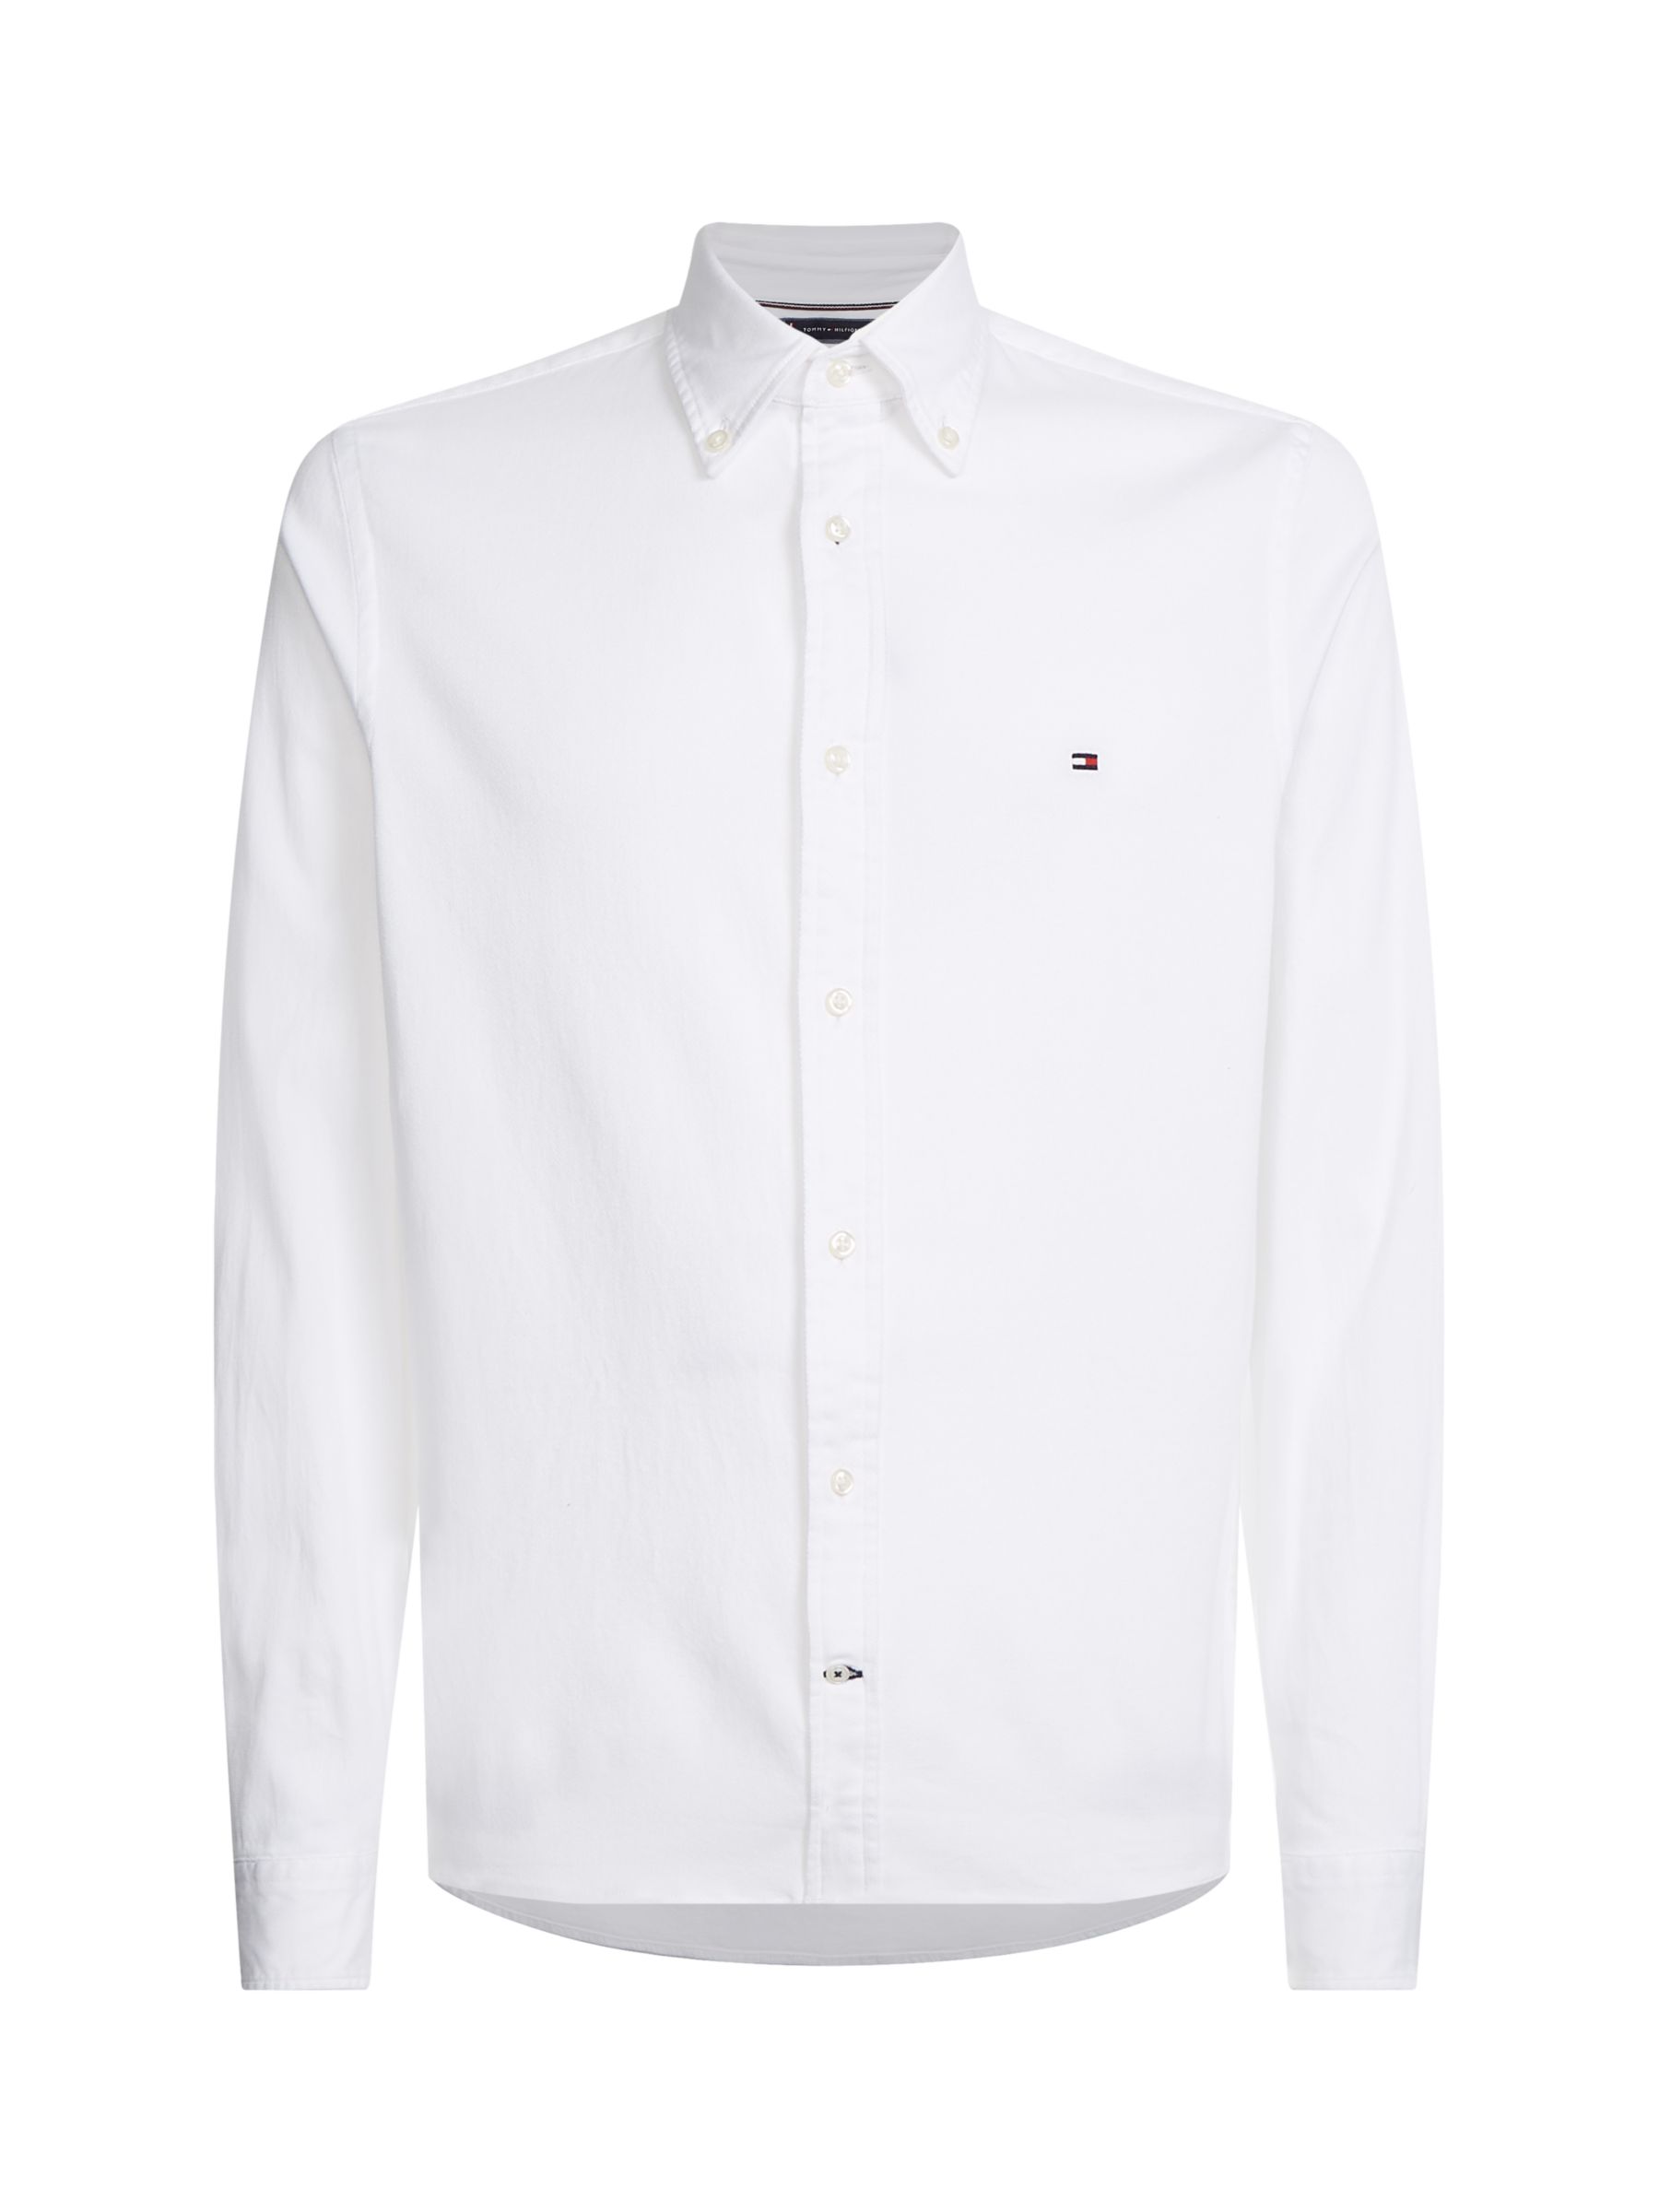 Tommy Hilfiger Core Flex Dobby Slim Fit Shirt, White, XS